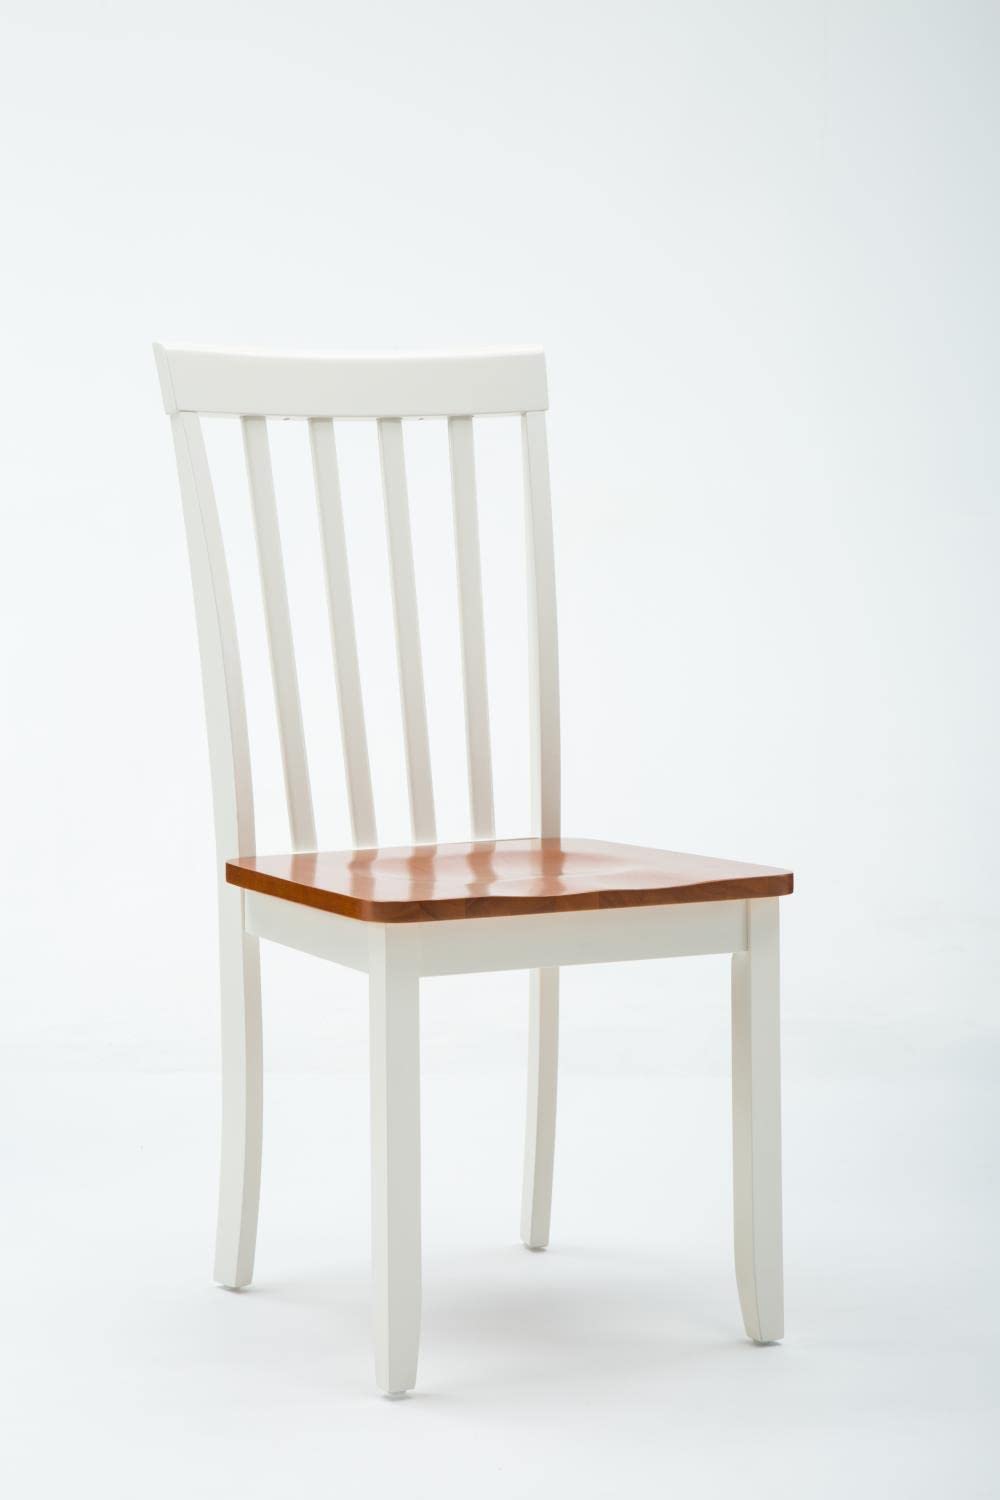 Boraam Bloomington Dining Chair, White/Honey Oak, Set of 2